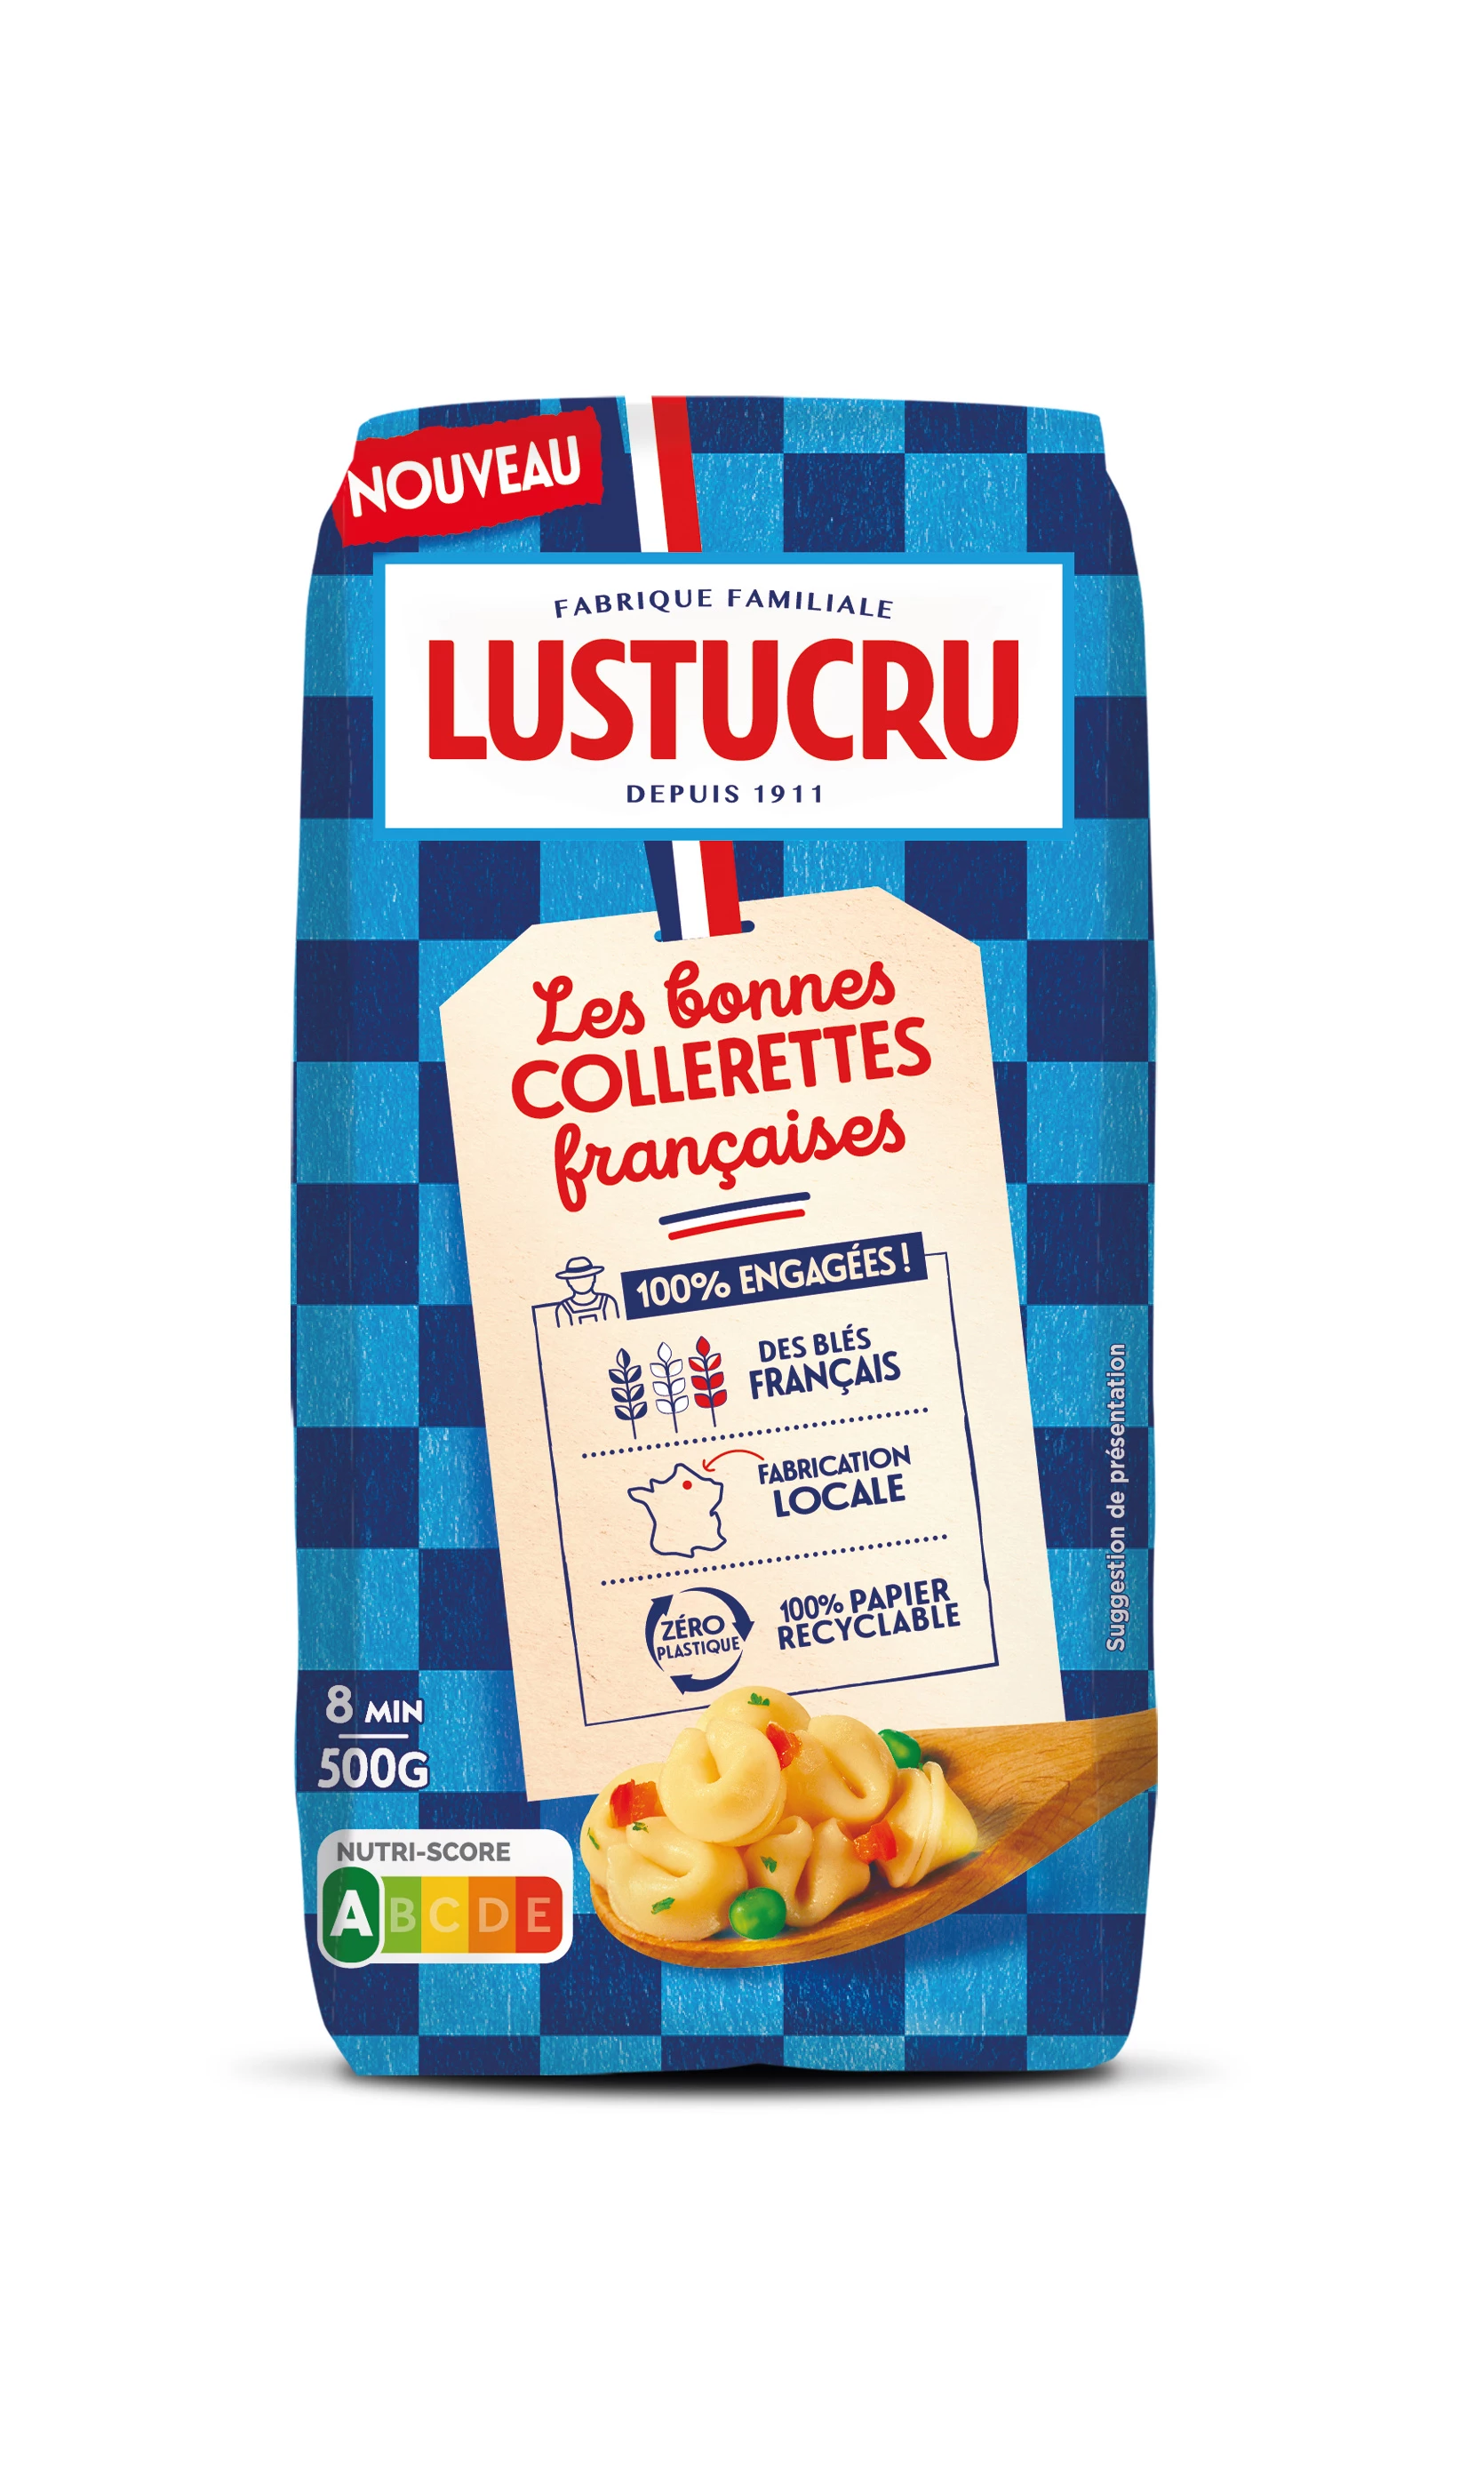 Col·lerettes-Paste, 500g - LUSTUCRU